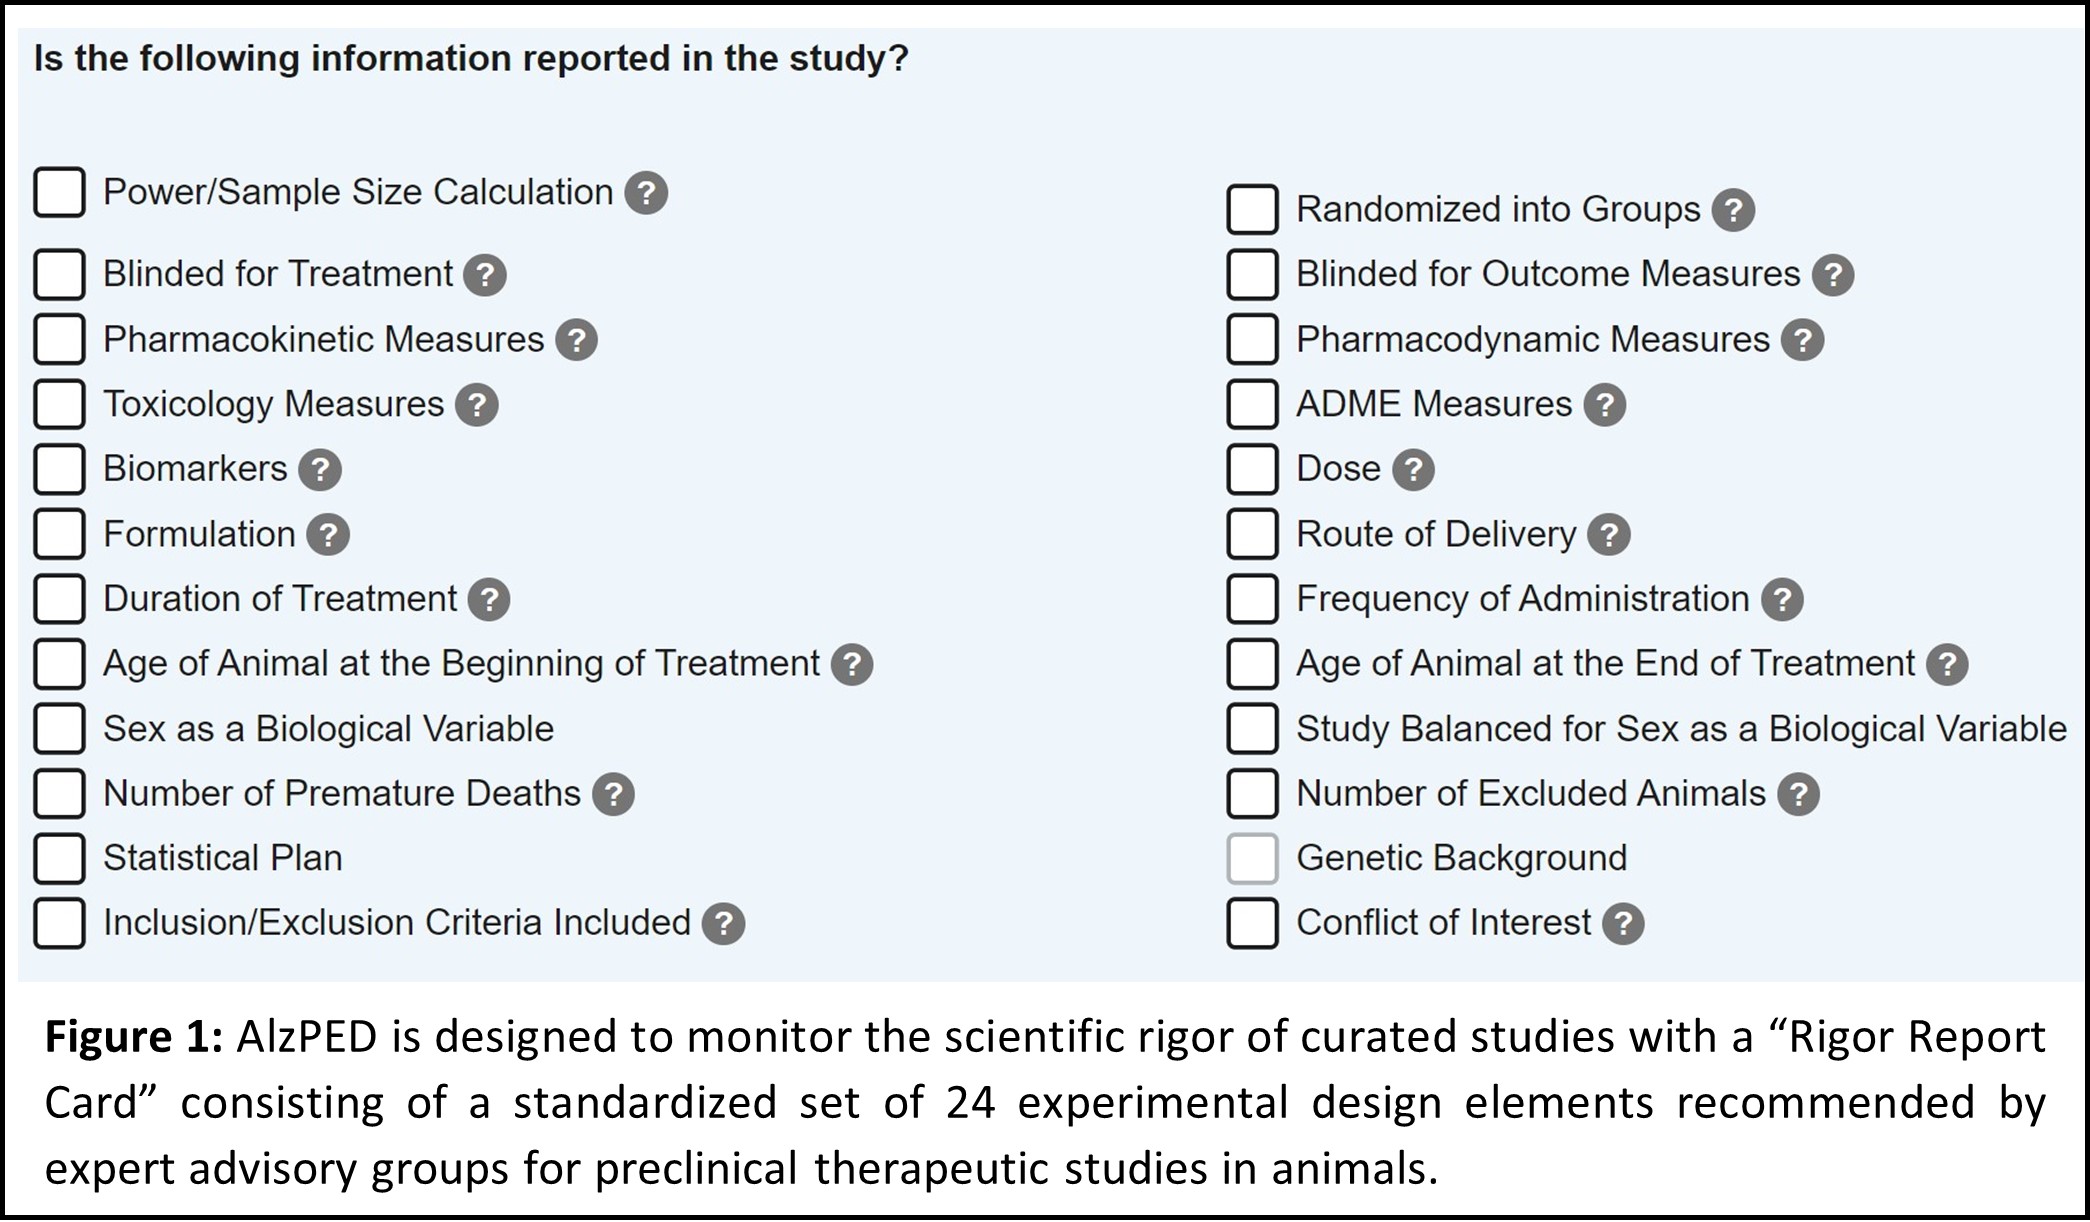 Standardized set of 24 experimental design elements